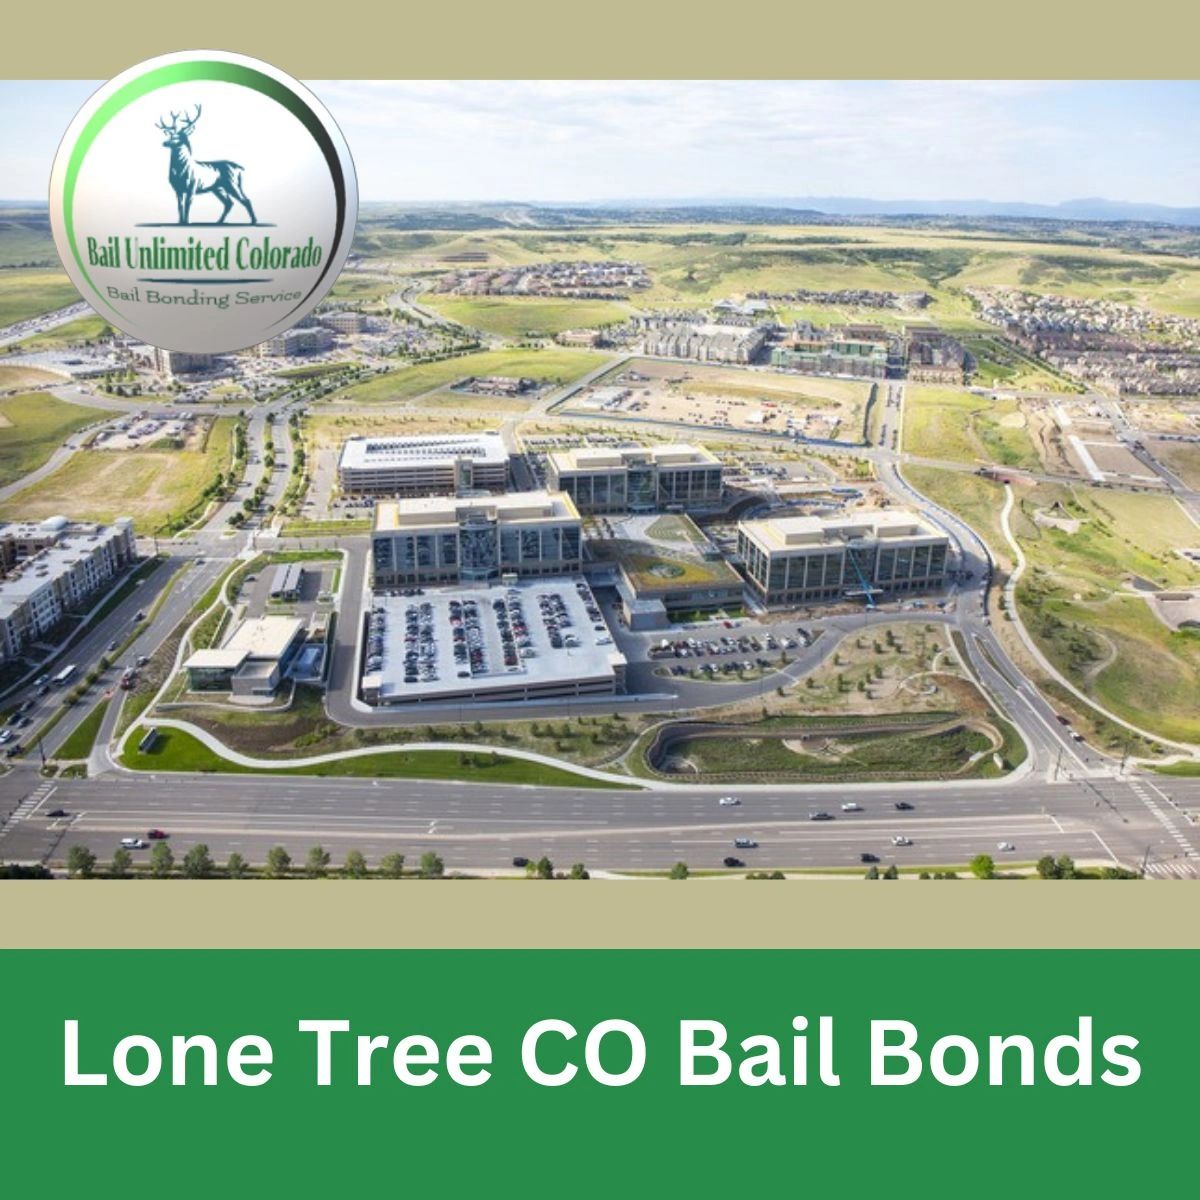 Lone Tree CO Bail Bonds LOGO Bail Unlimited Colorado PIC Lone Tree City 39.53648, -104.89706 Douglas